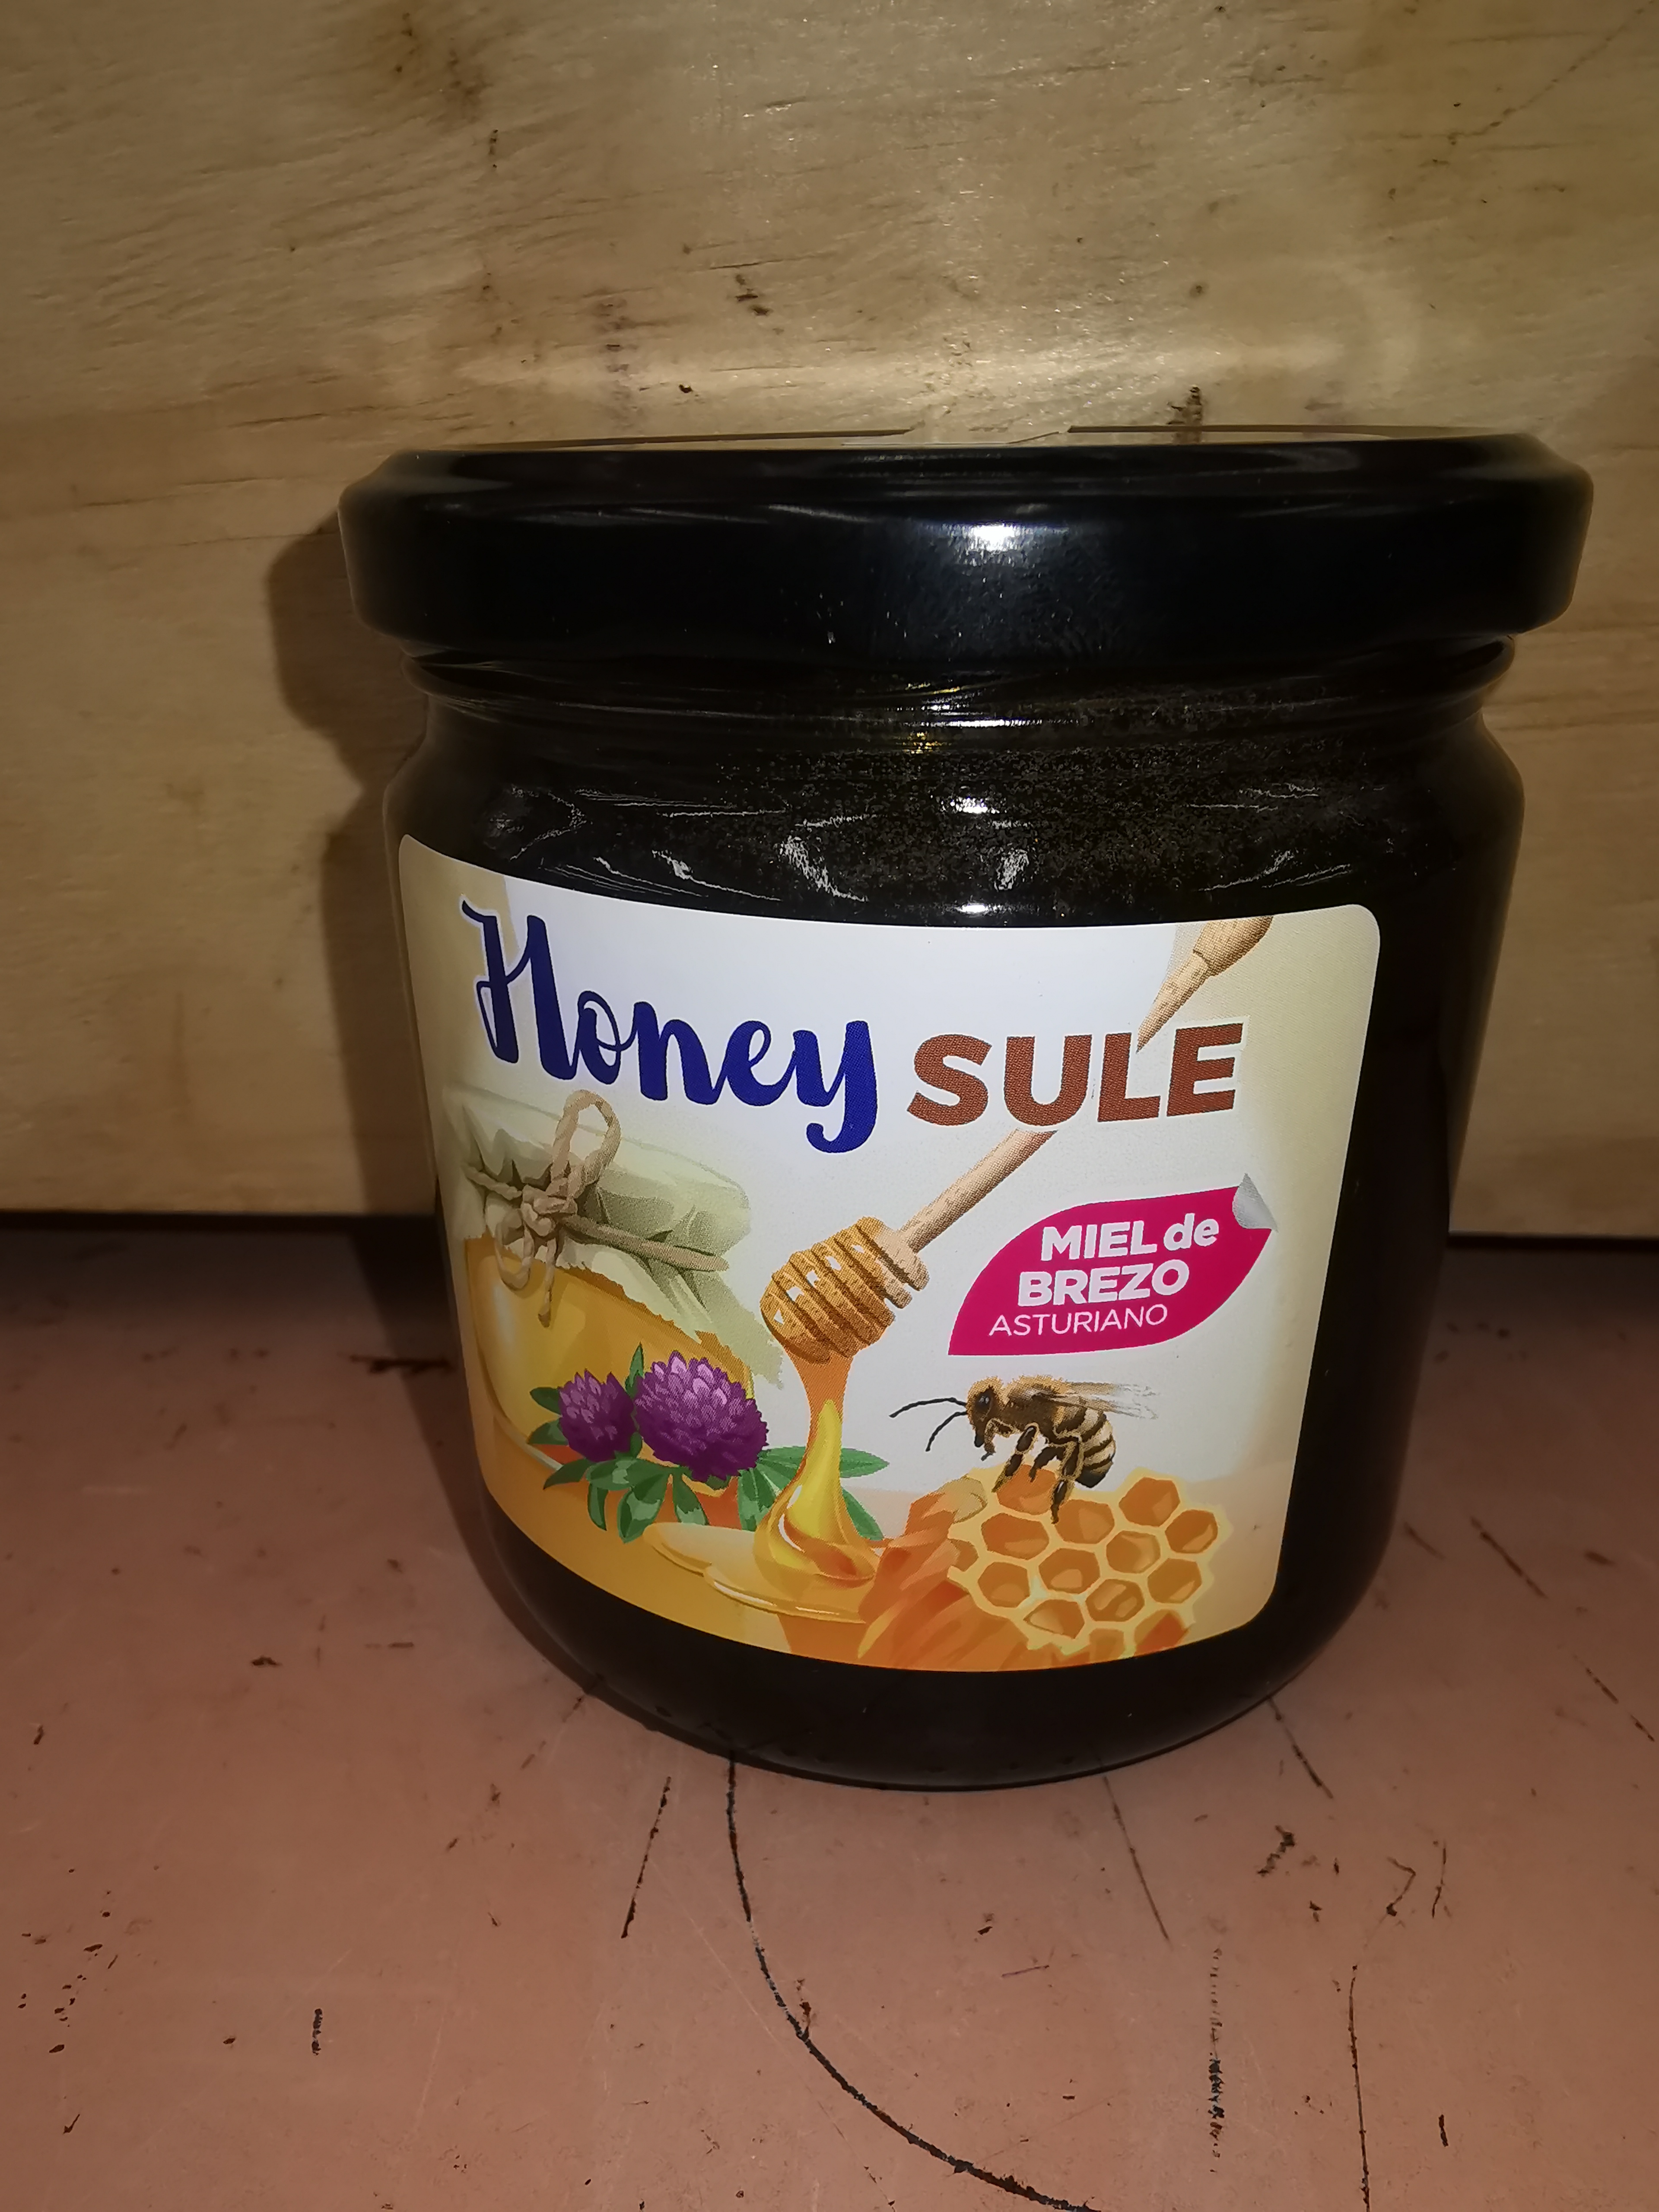 Honey sule - Miel de berzo